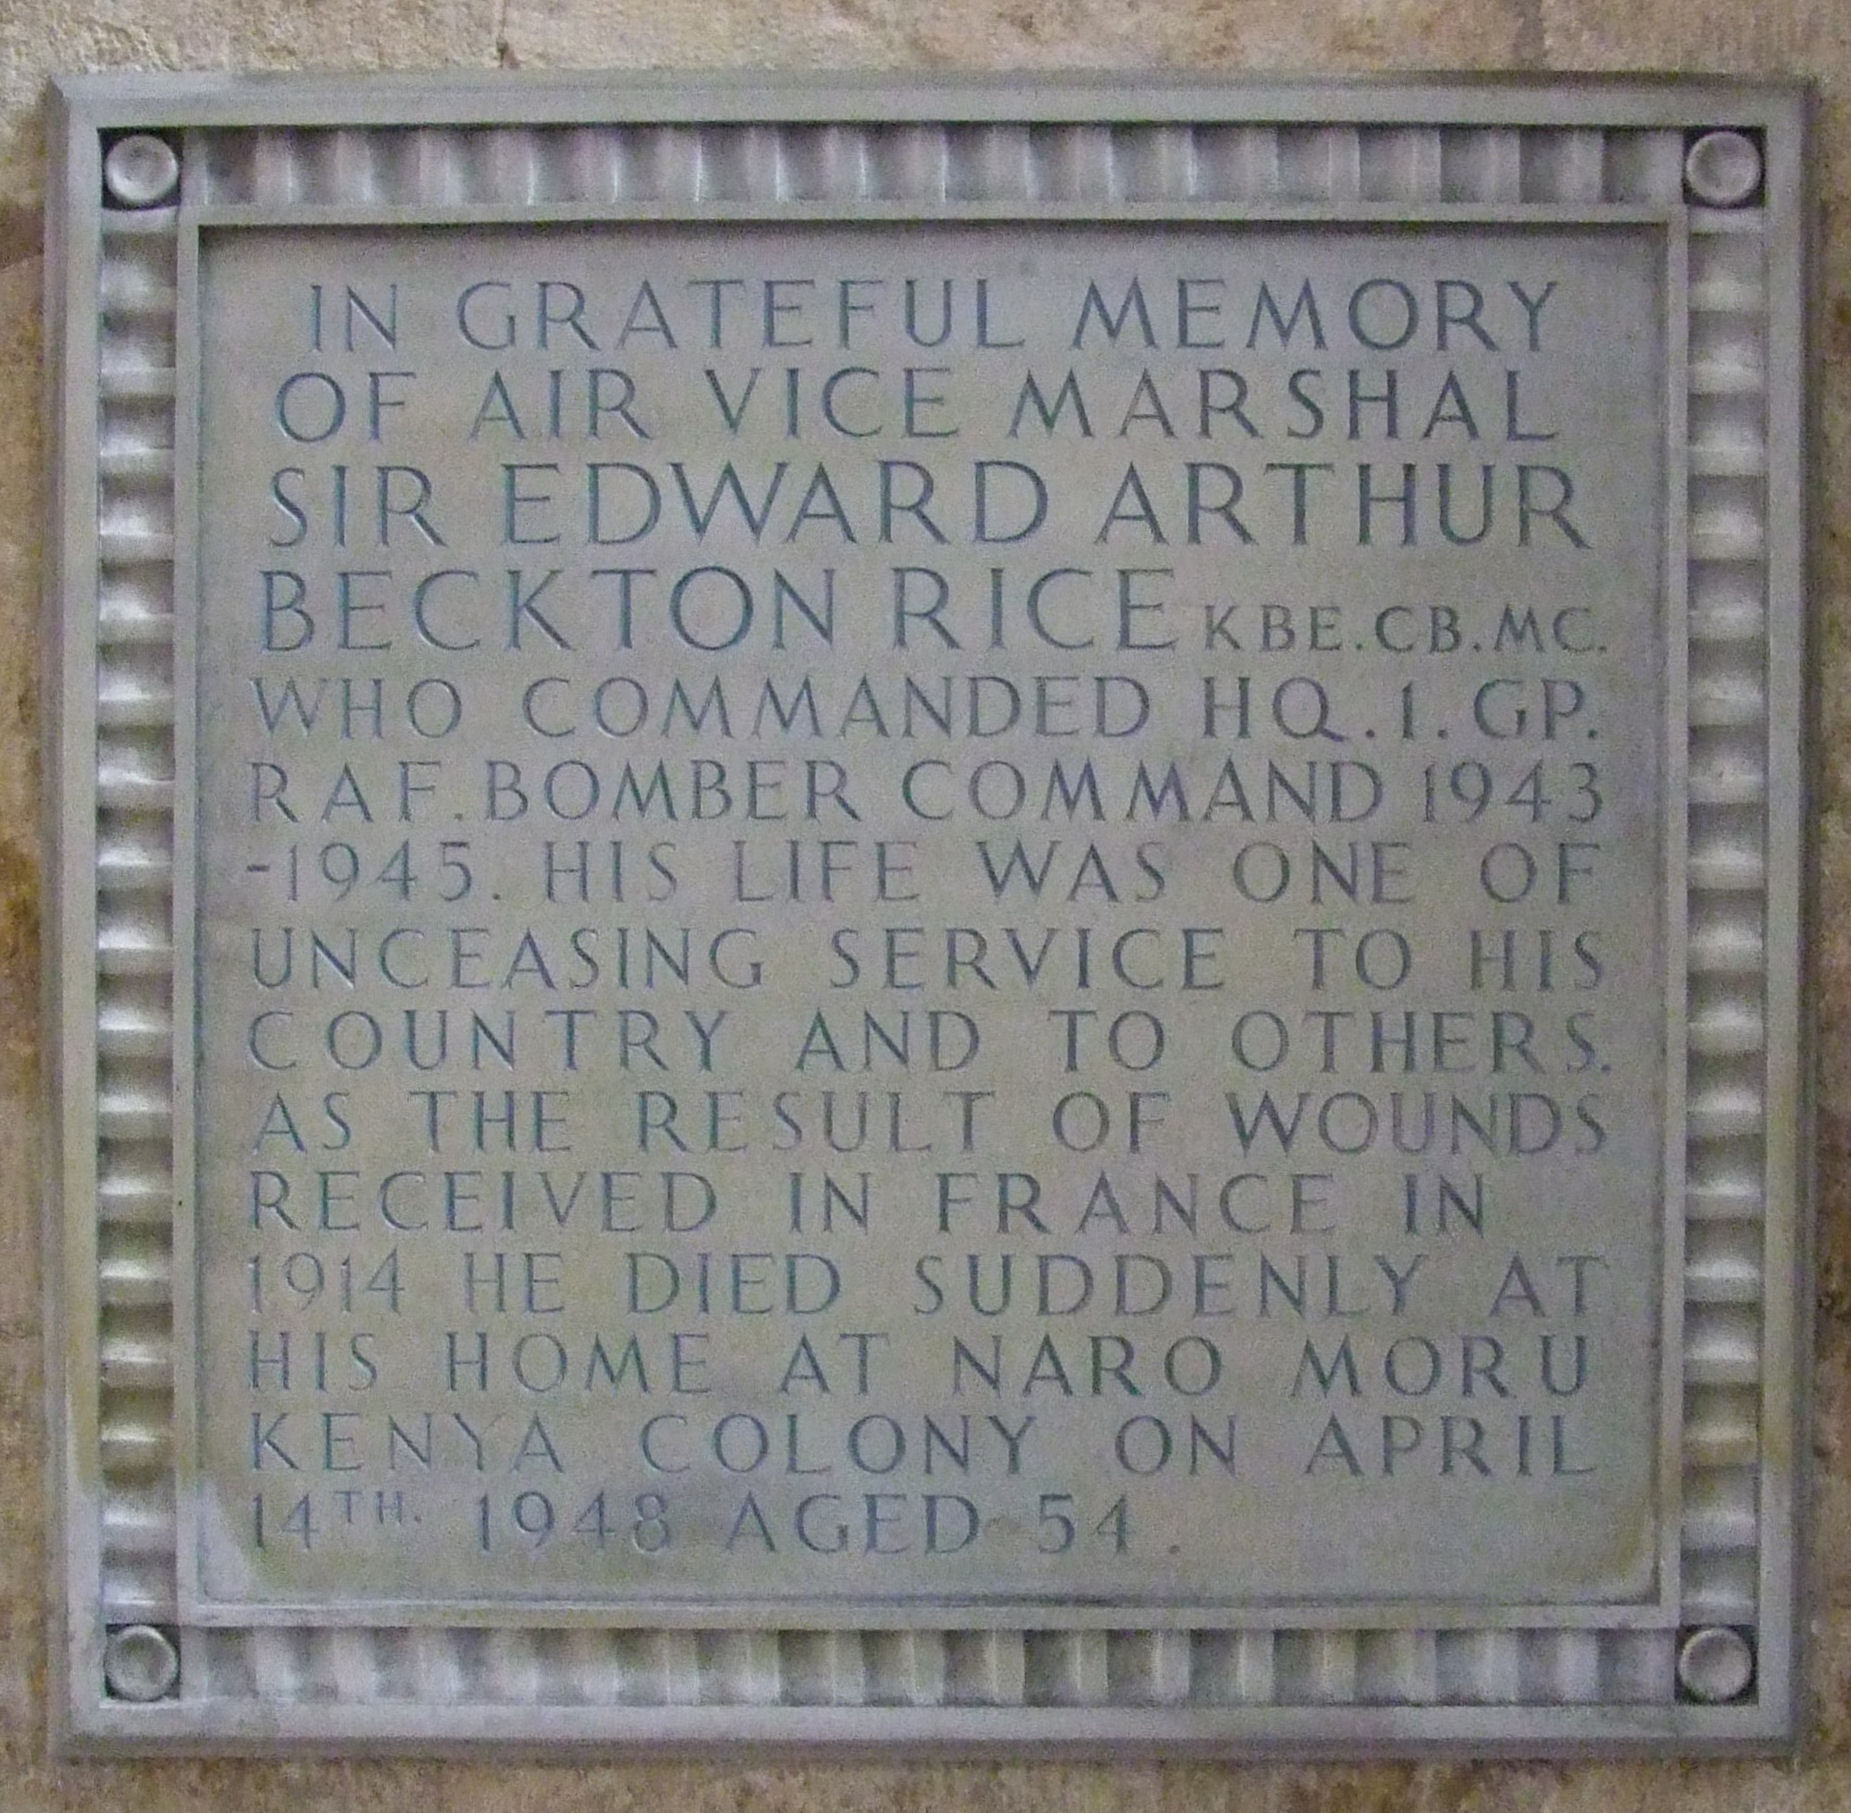 Edward Arthur Beckton Rice.